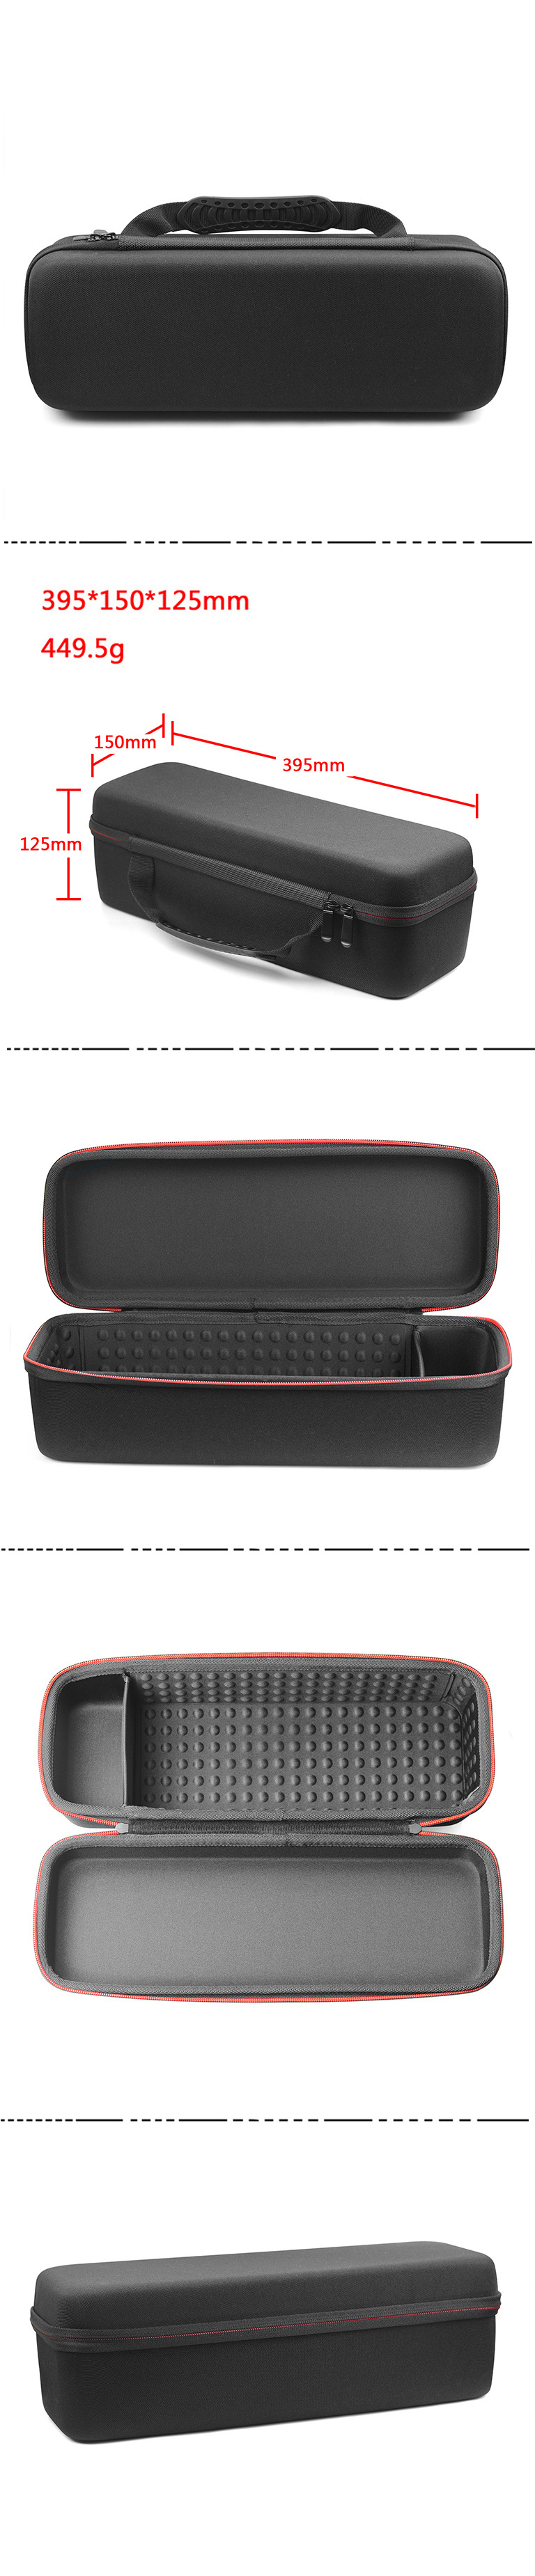 Bakeey-Outdoor-Travel-Portable-Large-Capacity-Dustproof-Wear-Resistant-Nylon-Storage-Box-Bag-Organiz-1797560-3